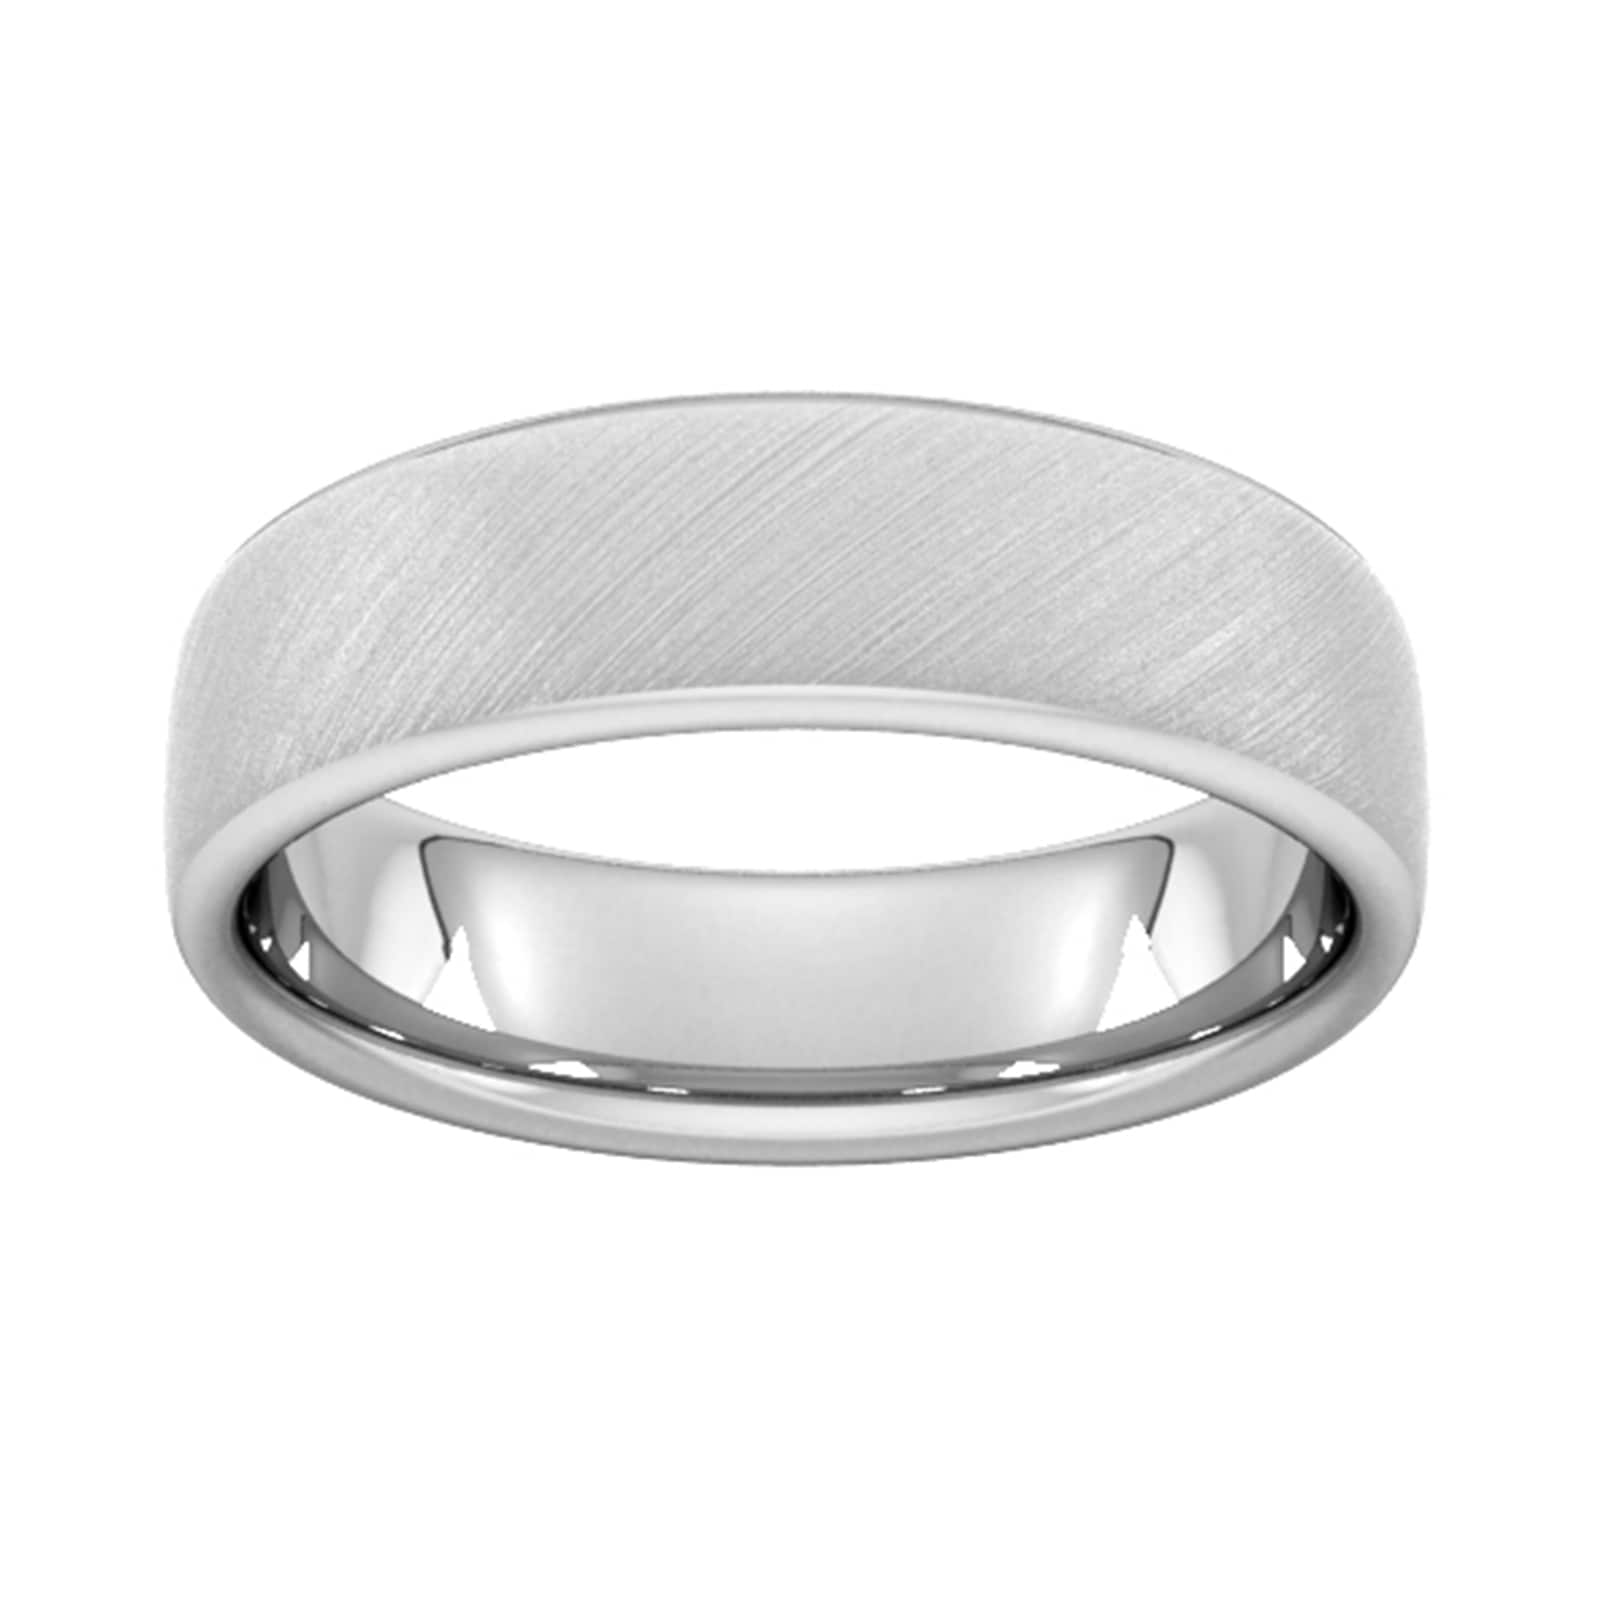 6mm Flat Court Heavy Diagonal Matt Finish Wedding Ring In 9 Carat White Gold - Ring Size Q